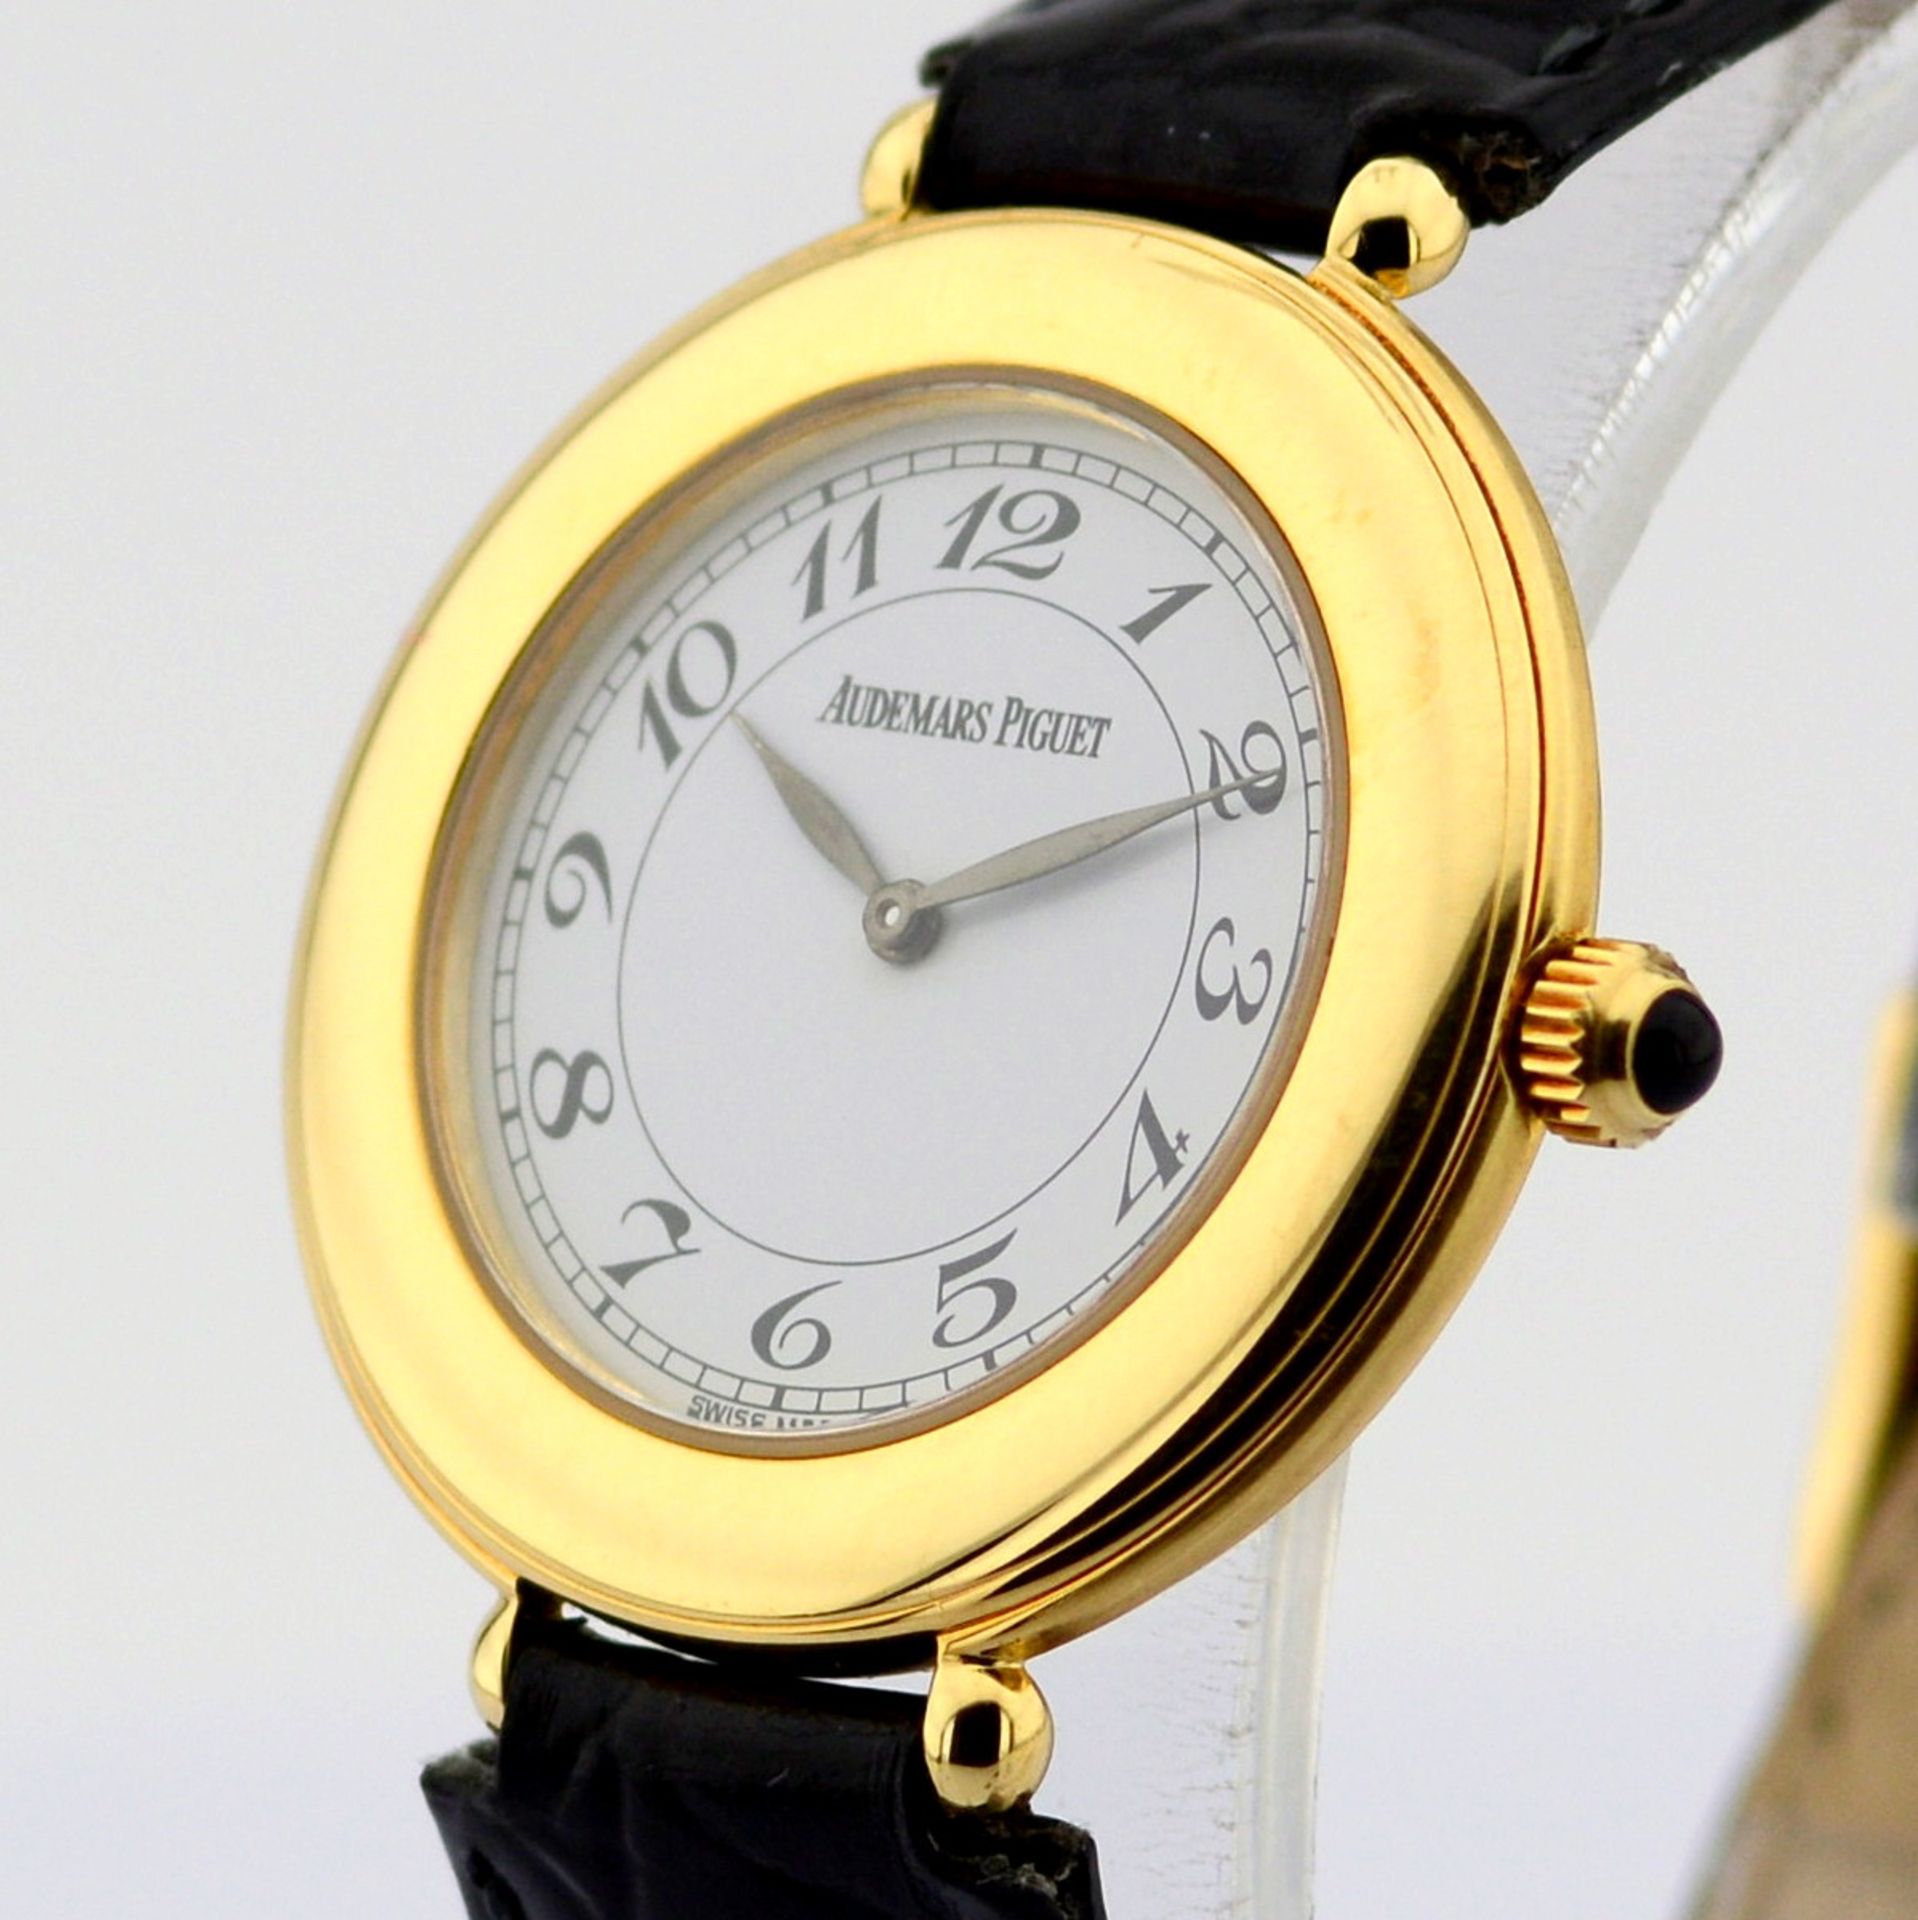 Audemars Piguet / Roy Stonea 18K Yellow Gold - Lady's Yellow gold Wrist Watch - Image 10 of 14